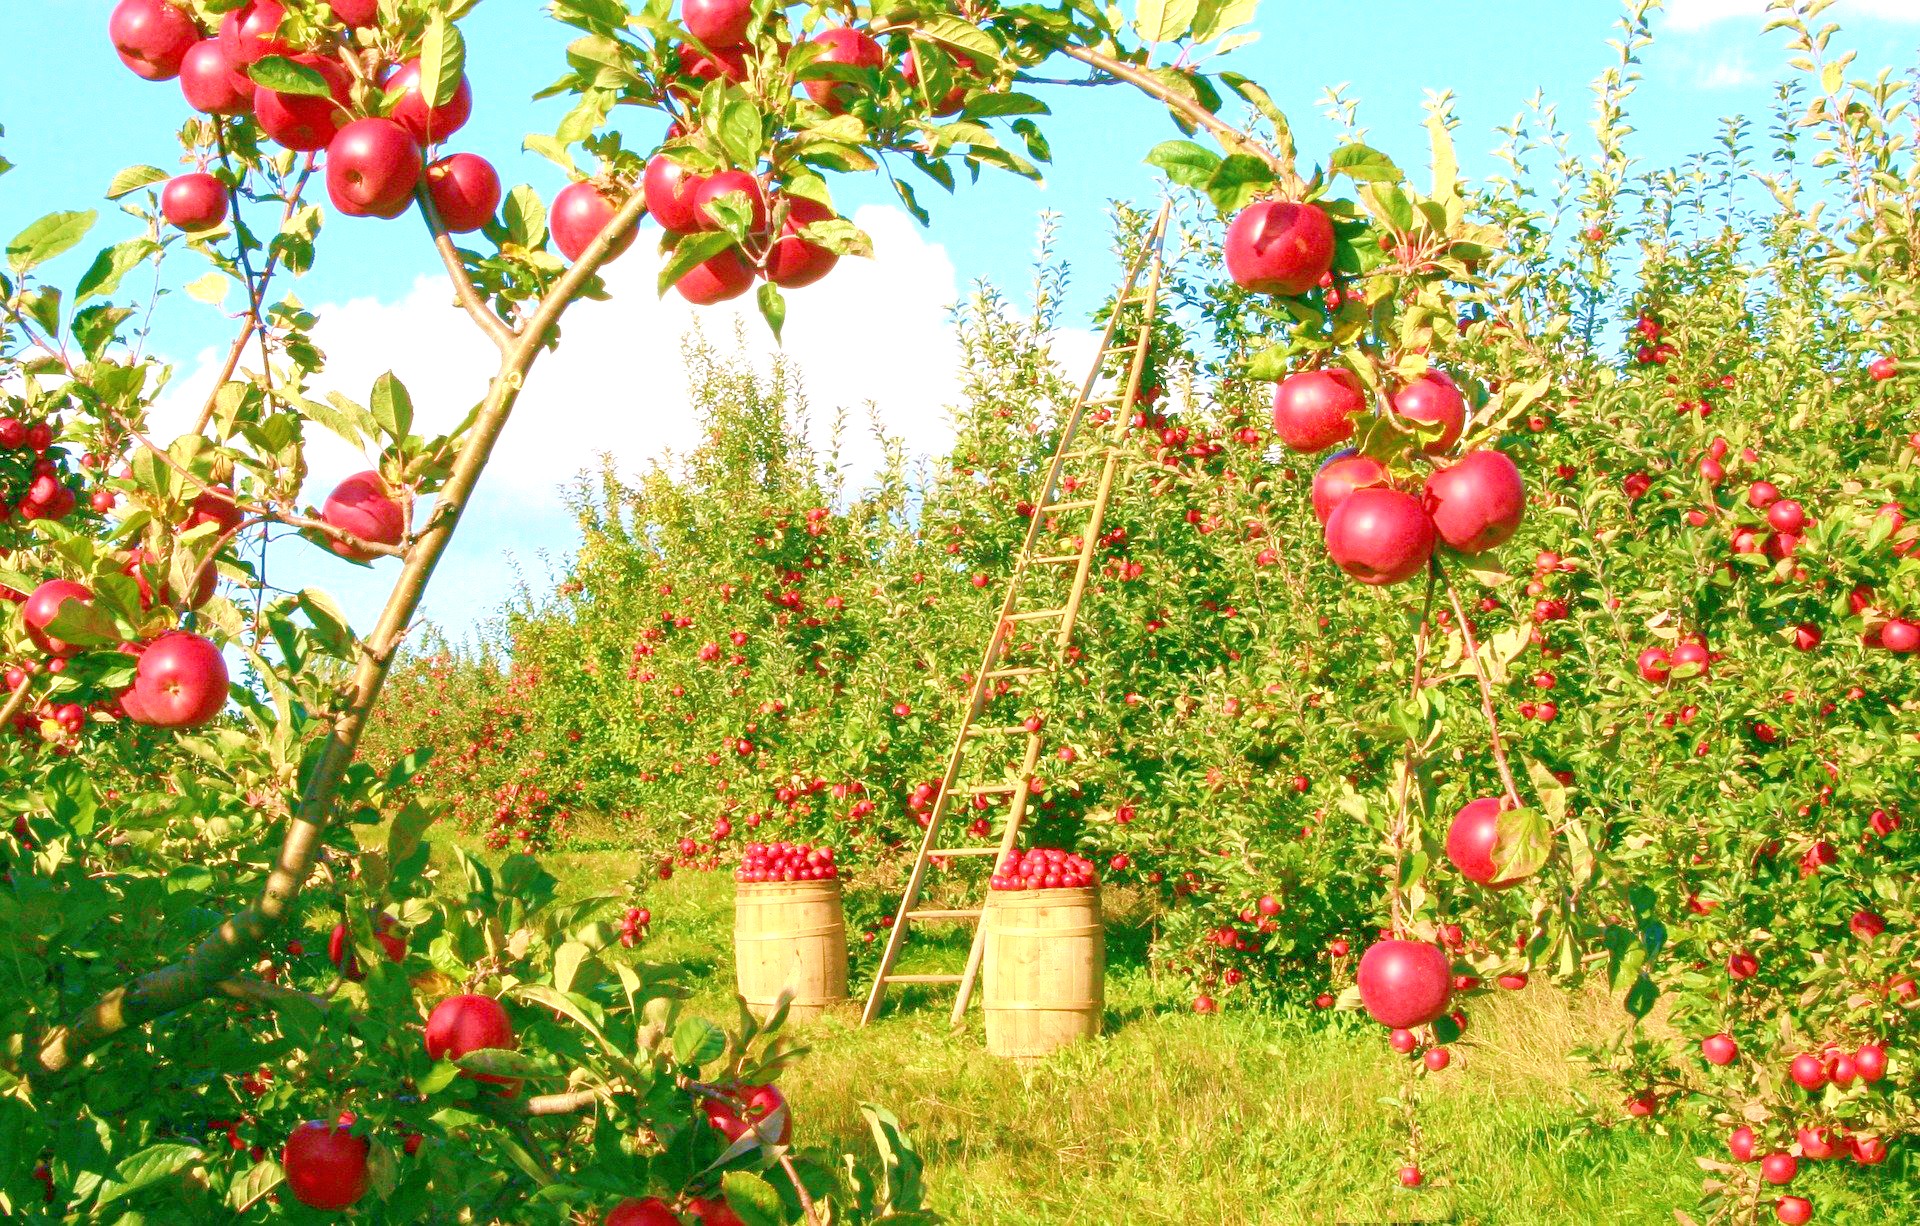 <img src="apple.jpg" alt="apple orchard landscape/> 